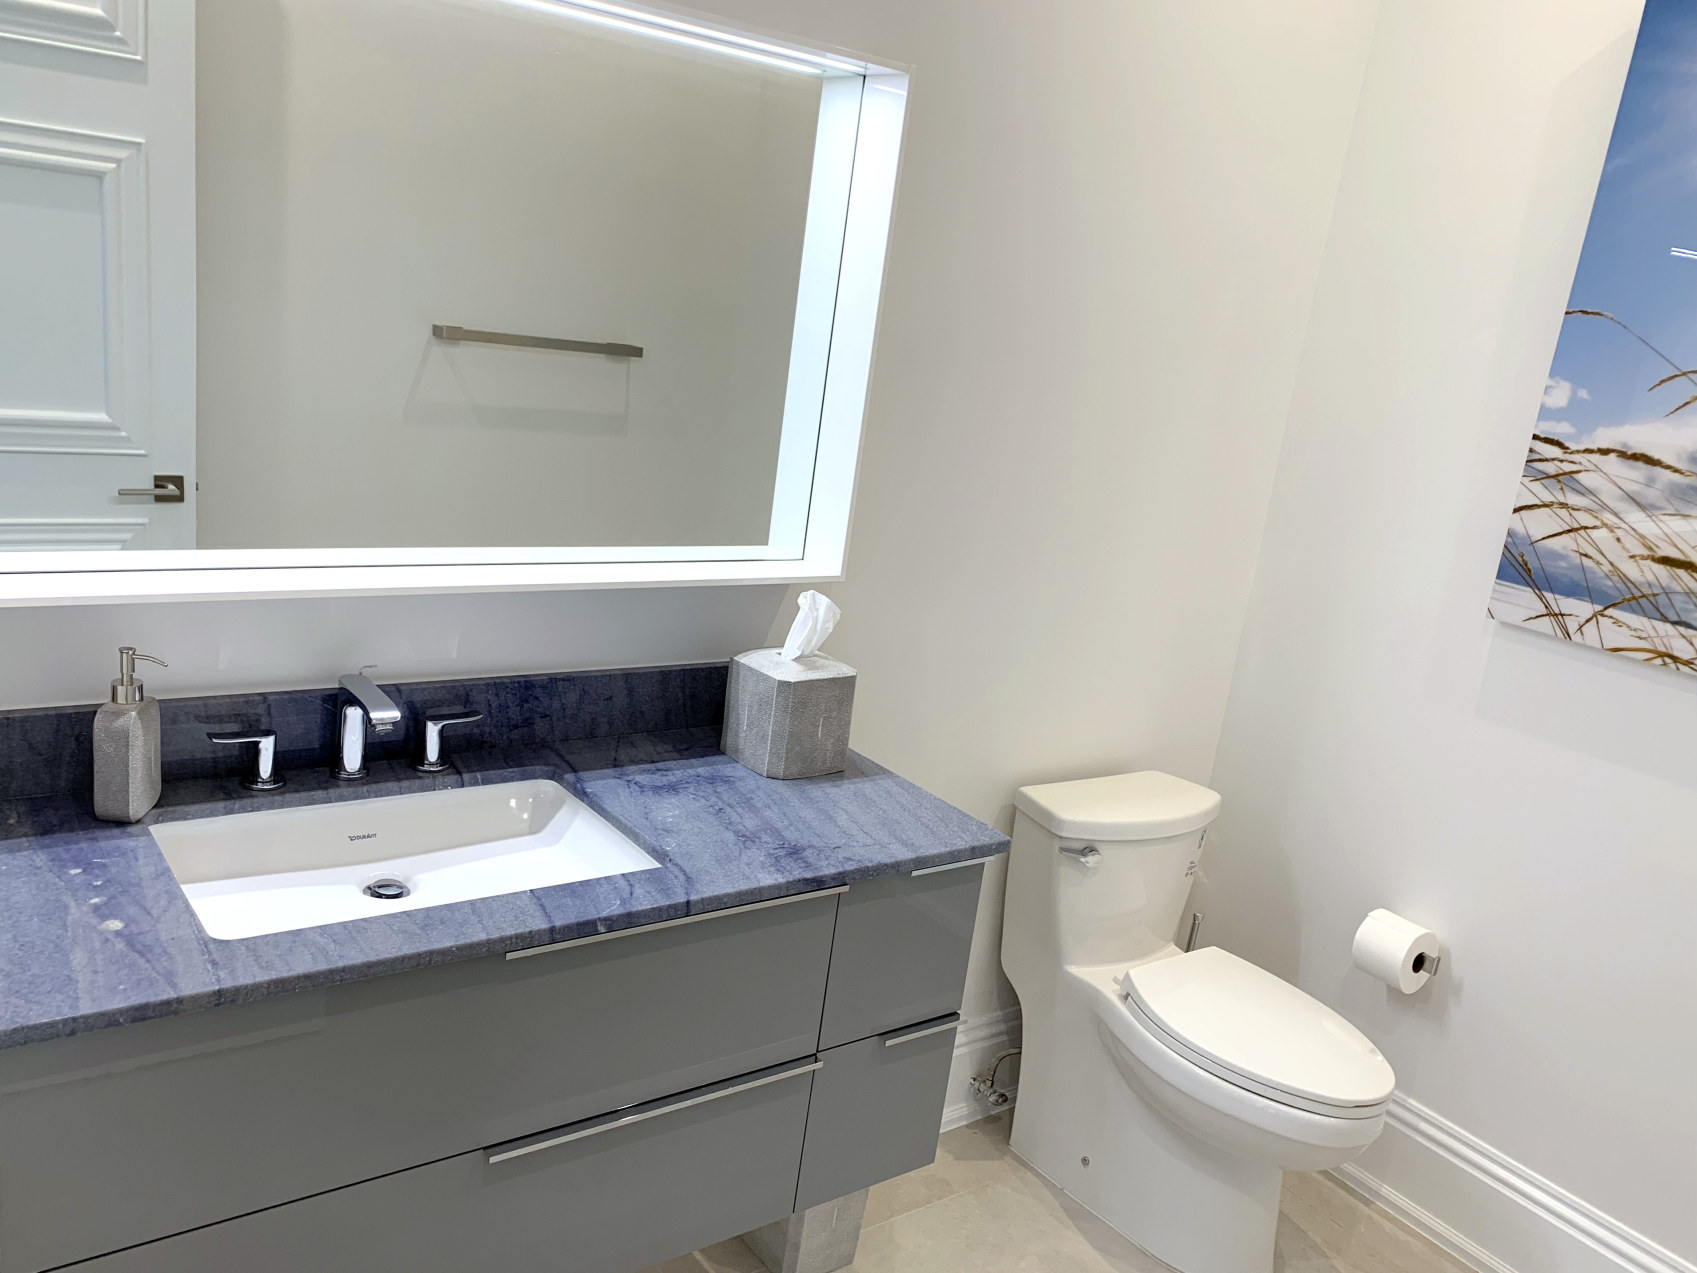 Half bathroom with floating vanity and Blue Macauba granite countertop